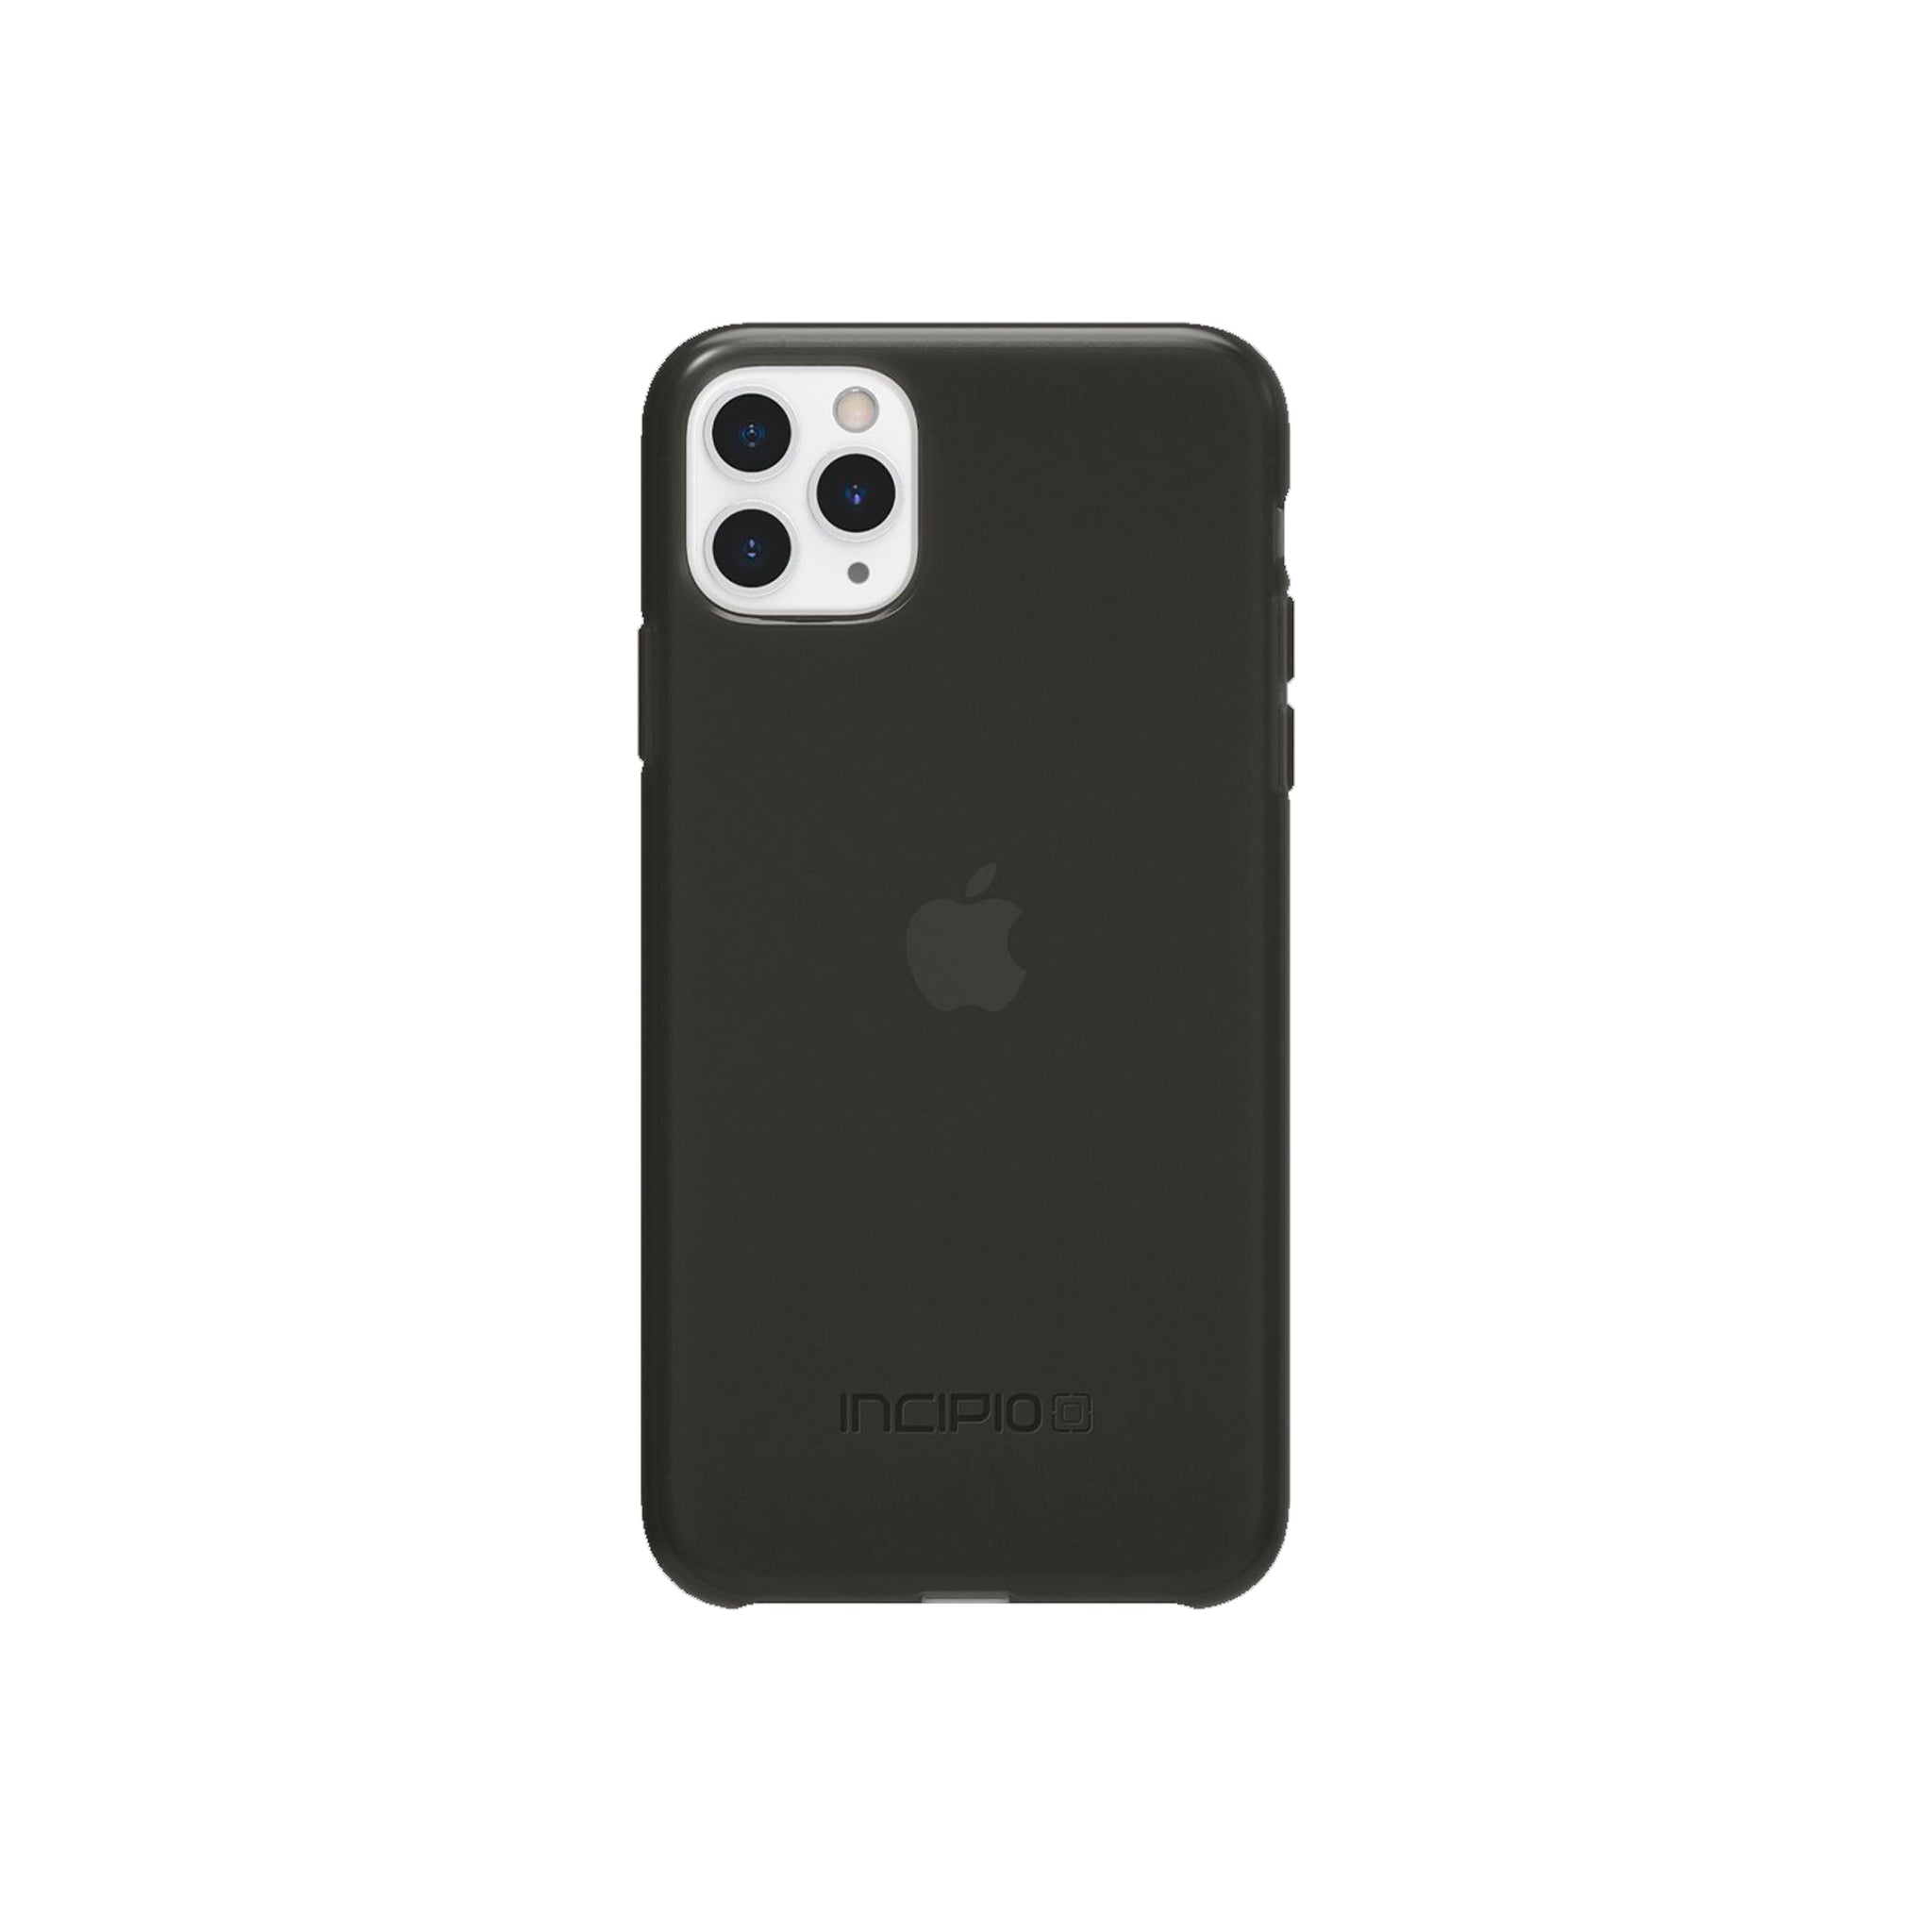 Incipio - Ngp Case For Apple iPhone 11 Pro Max - Black